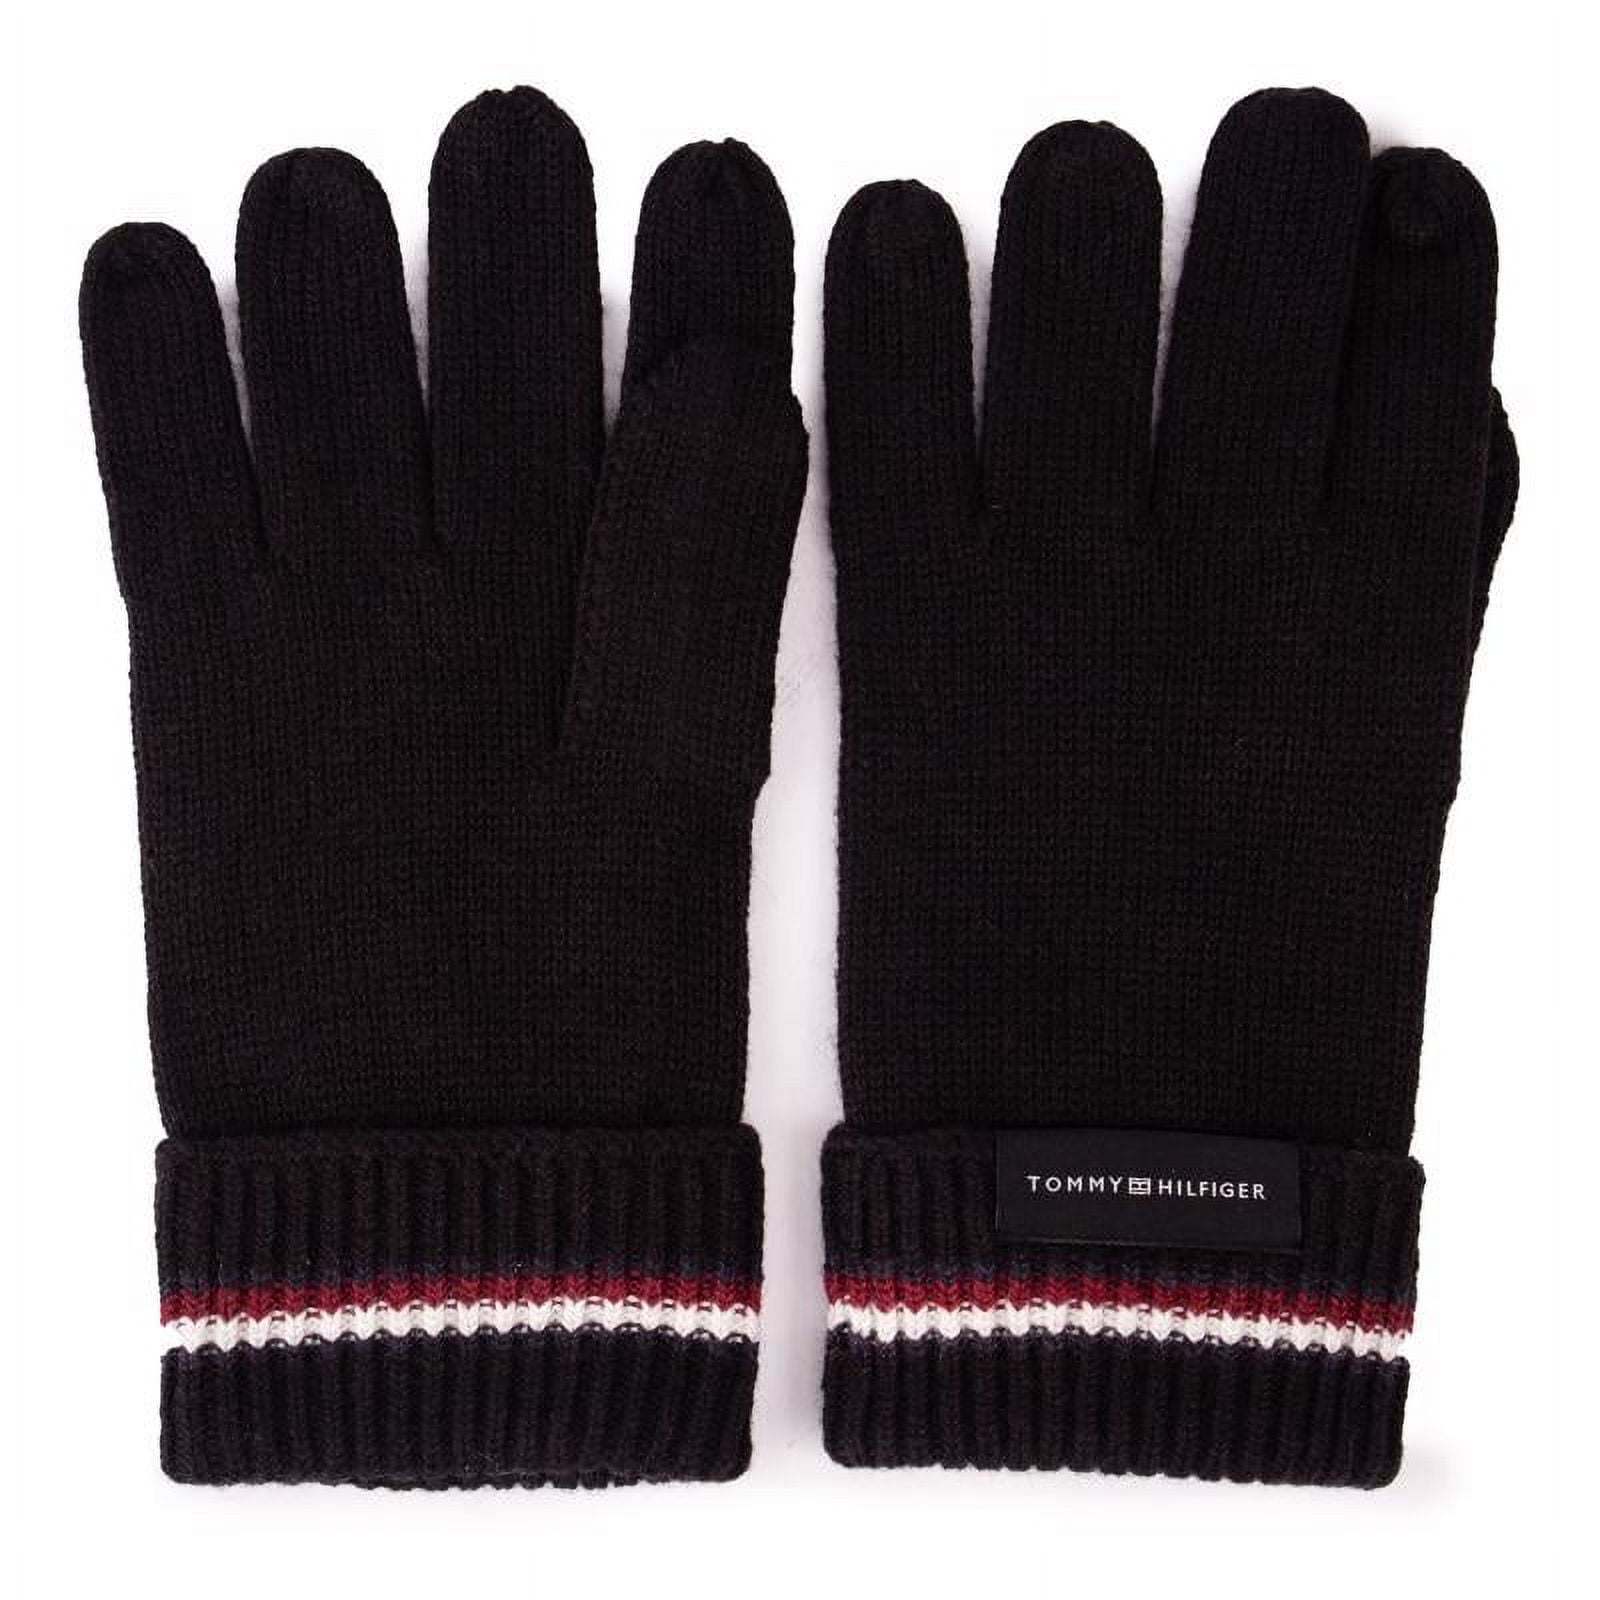 Tommy Hilfiger Corporate Knit Gloves